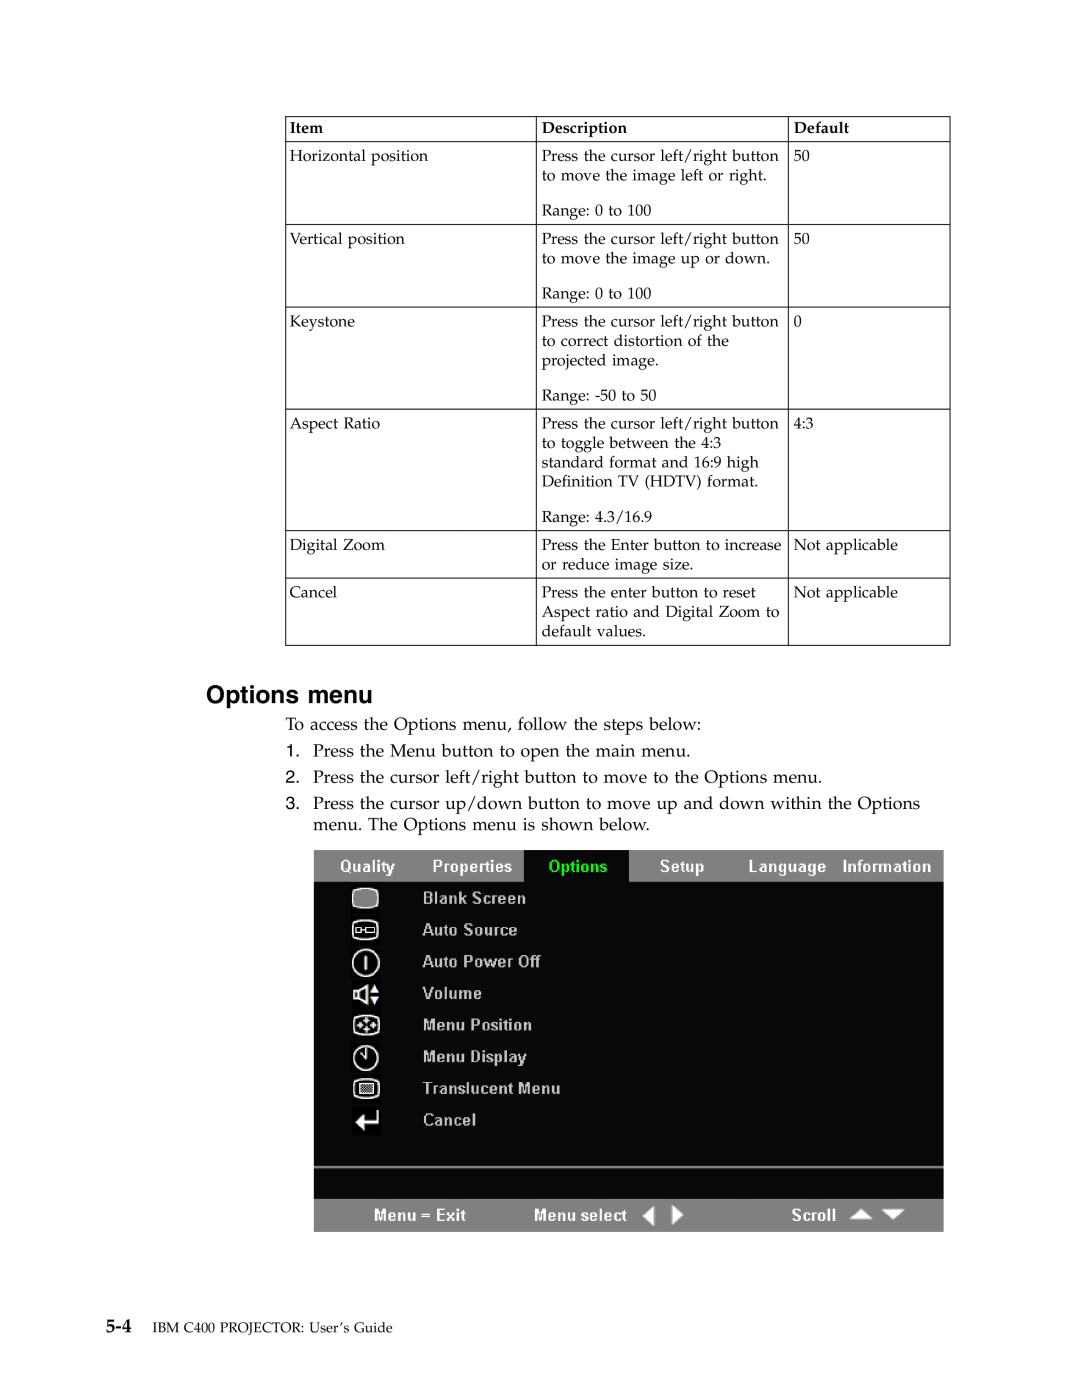 IBM PROJECTOR C400 manual Options menu, IBM C400 PROJECTOR User’s Guide 